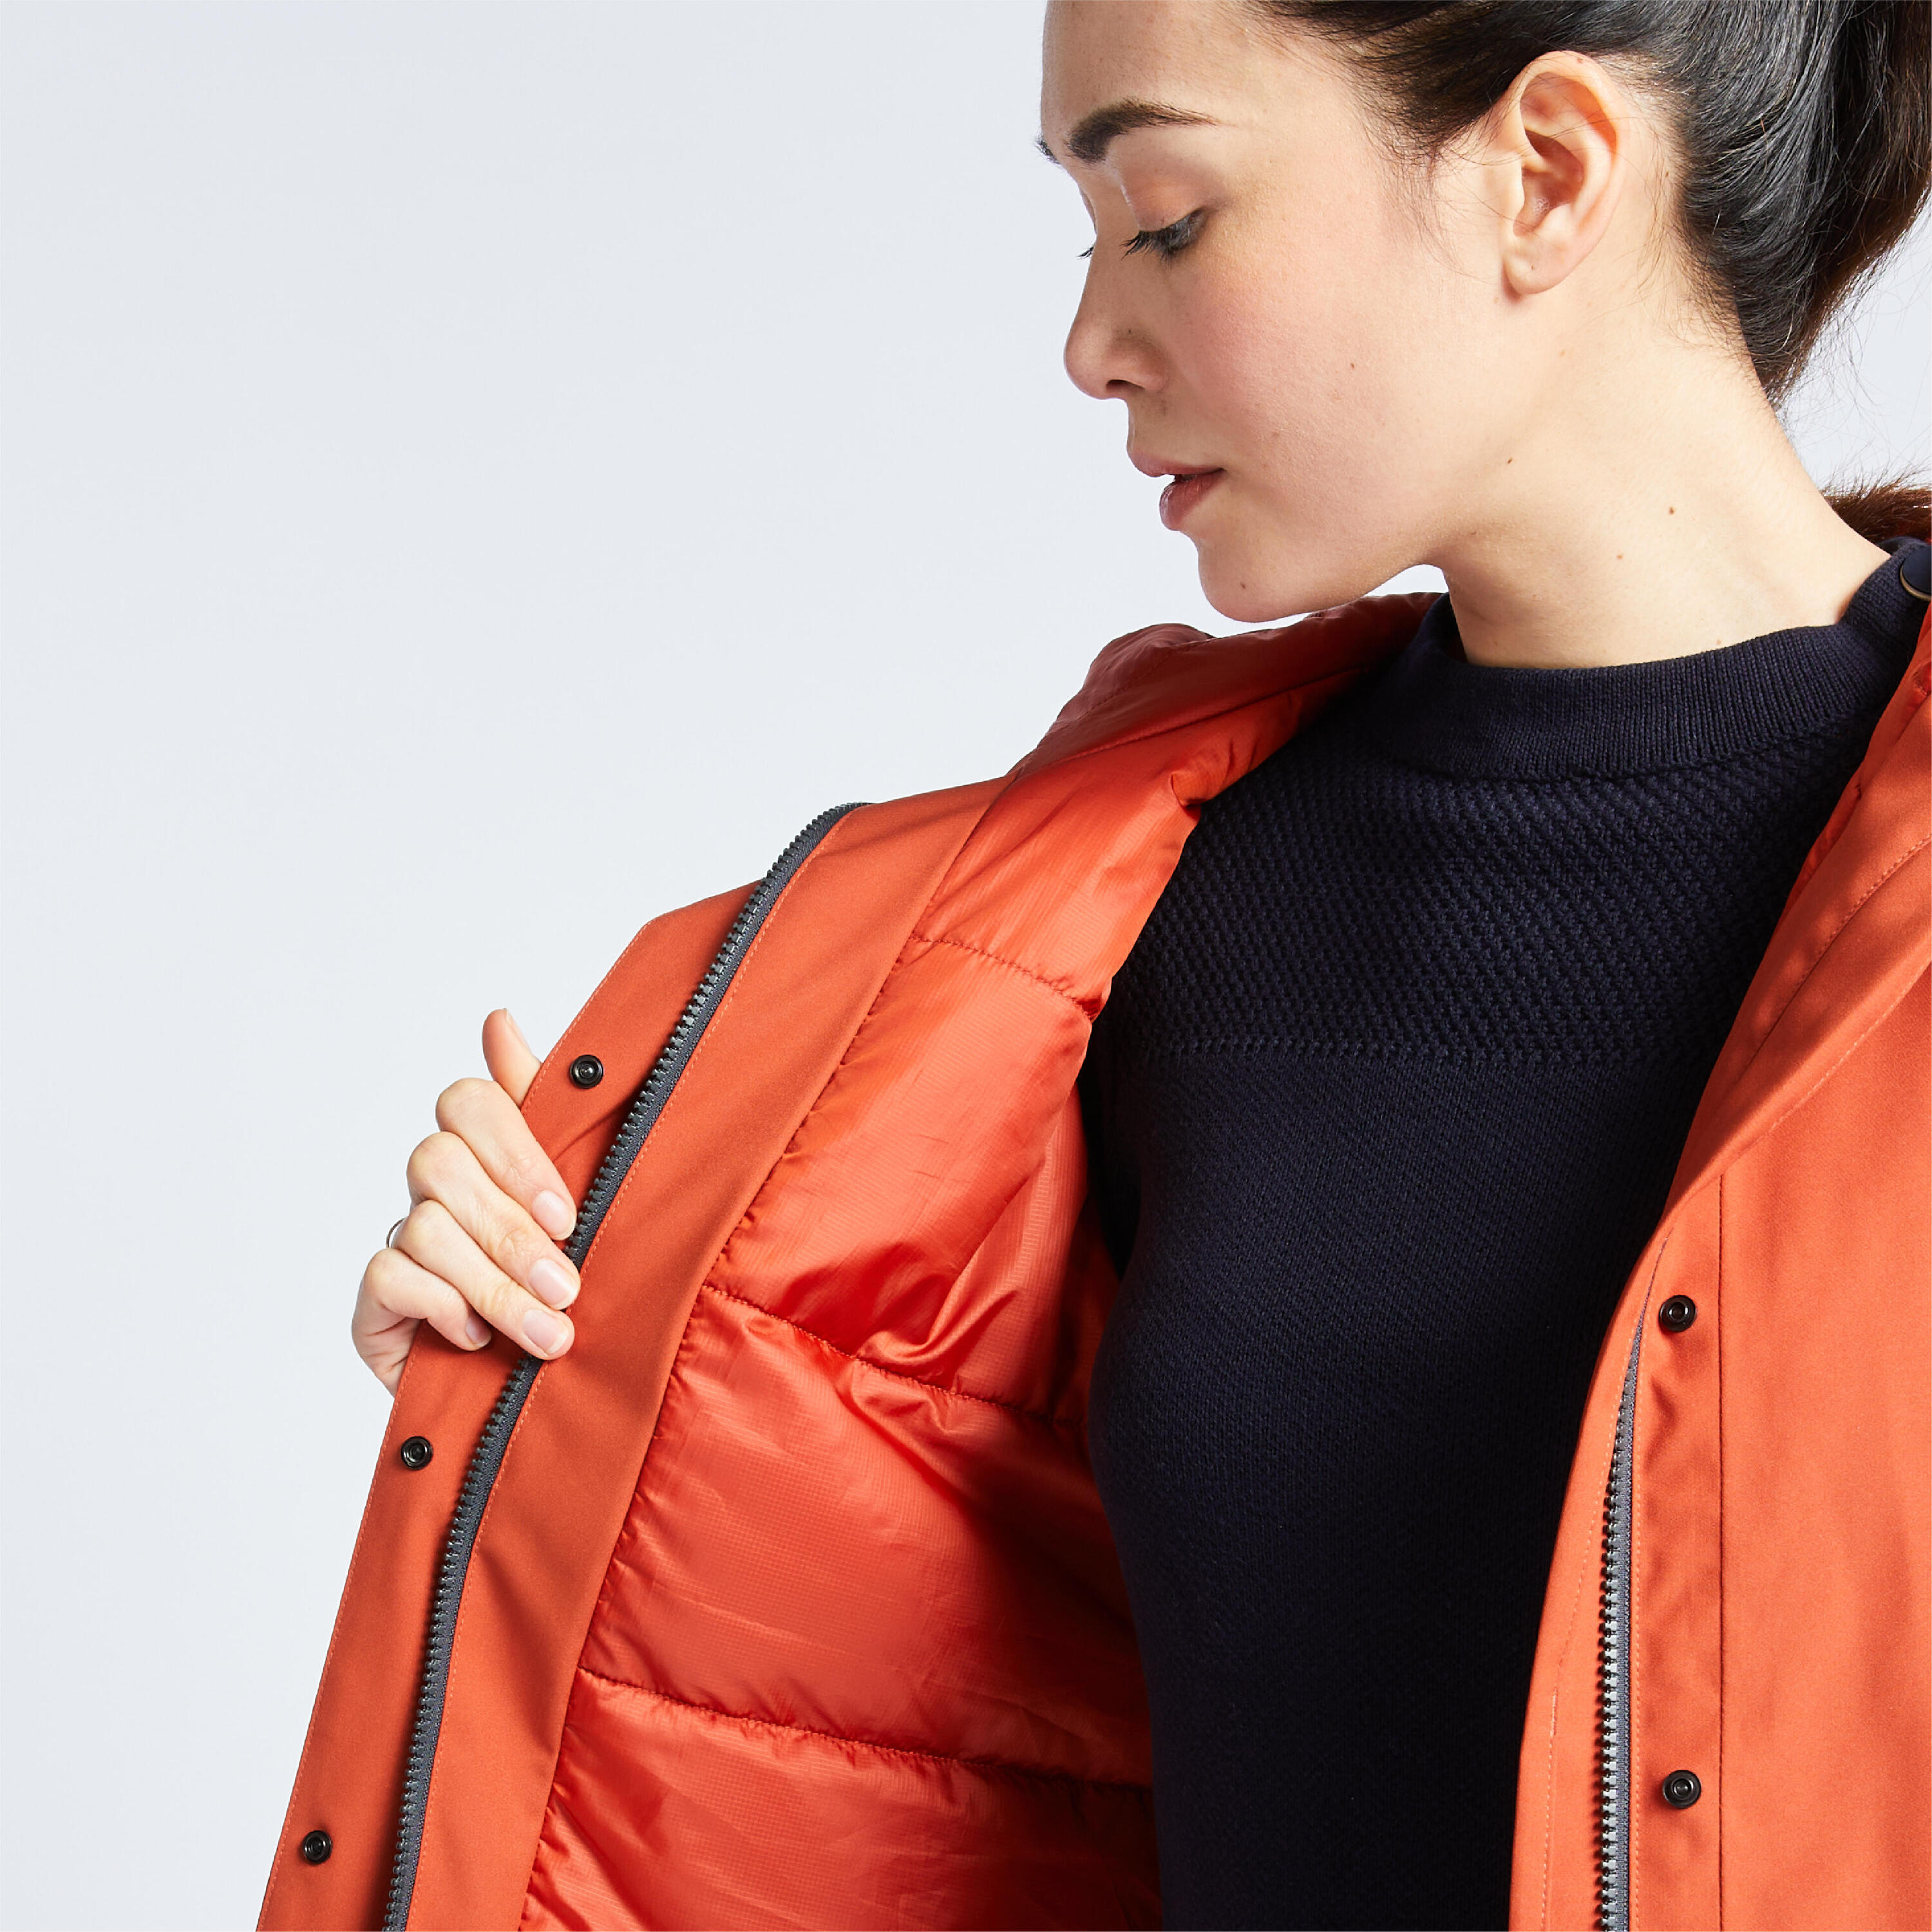 Women's warm waterproof windproof sailing jacket - SAILING 300 Dark orange 7/11